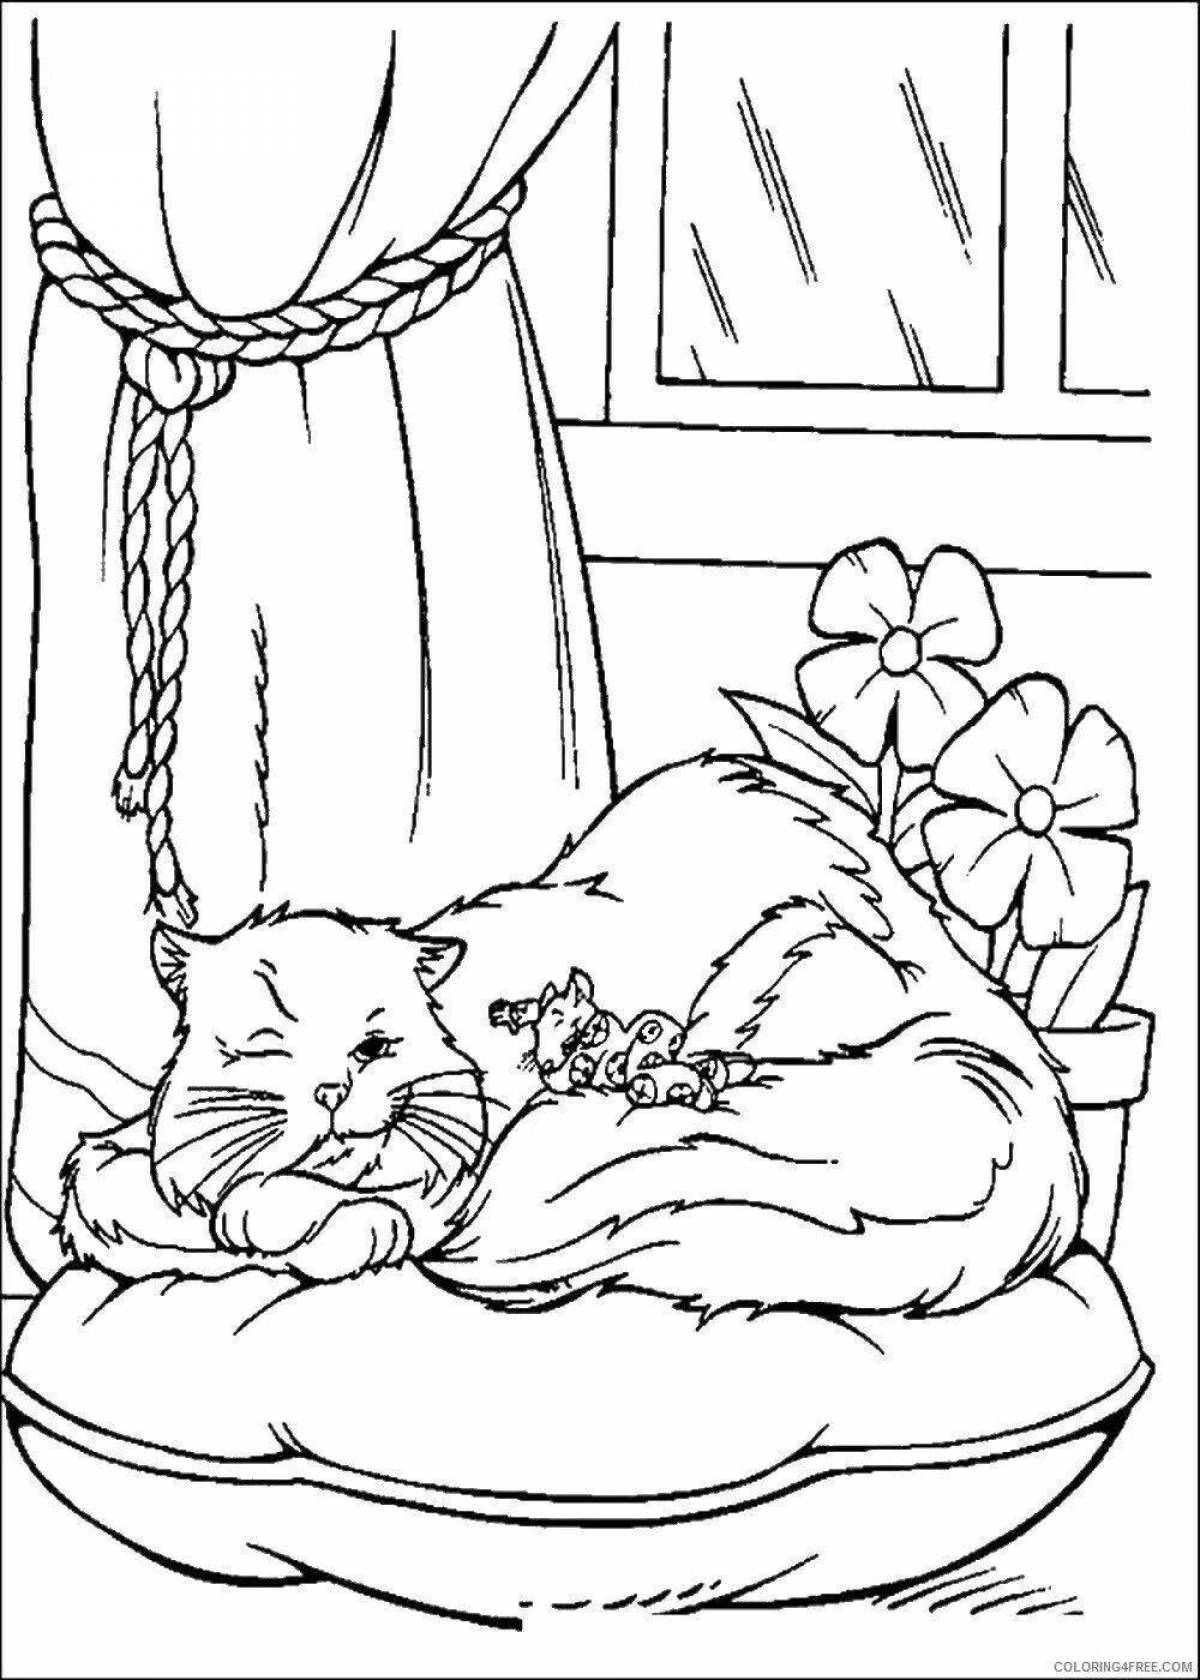 Coloring book calm sleeping cat